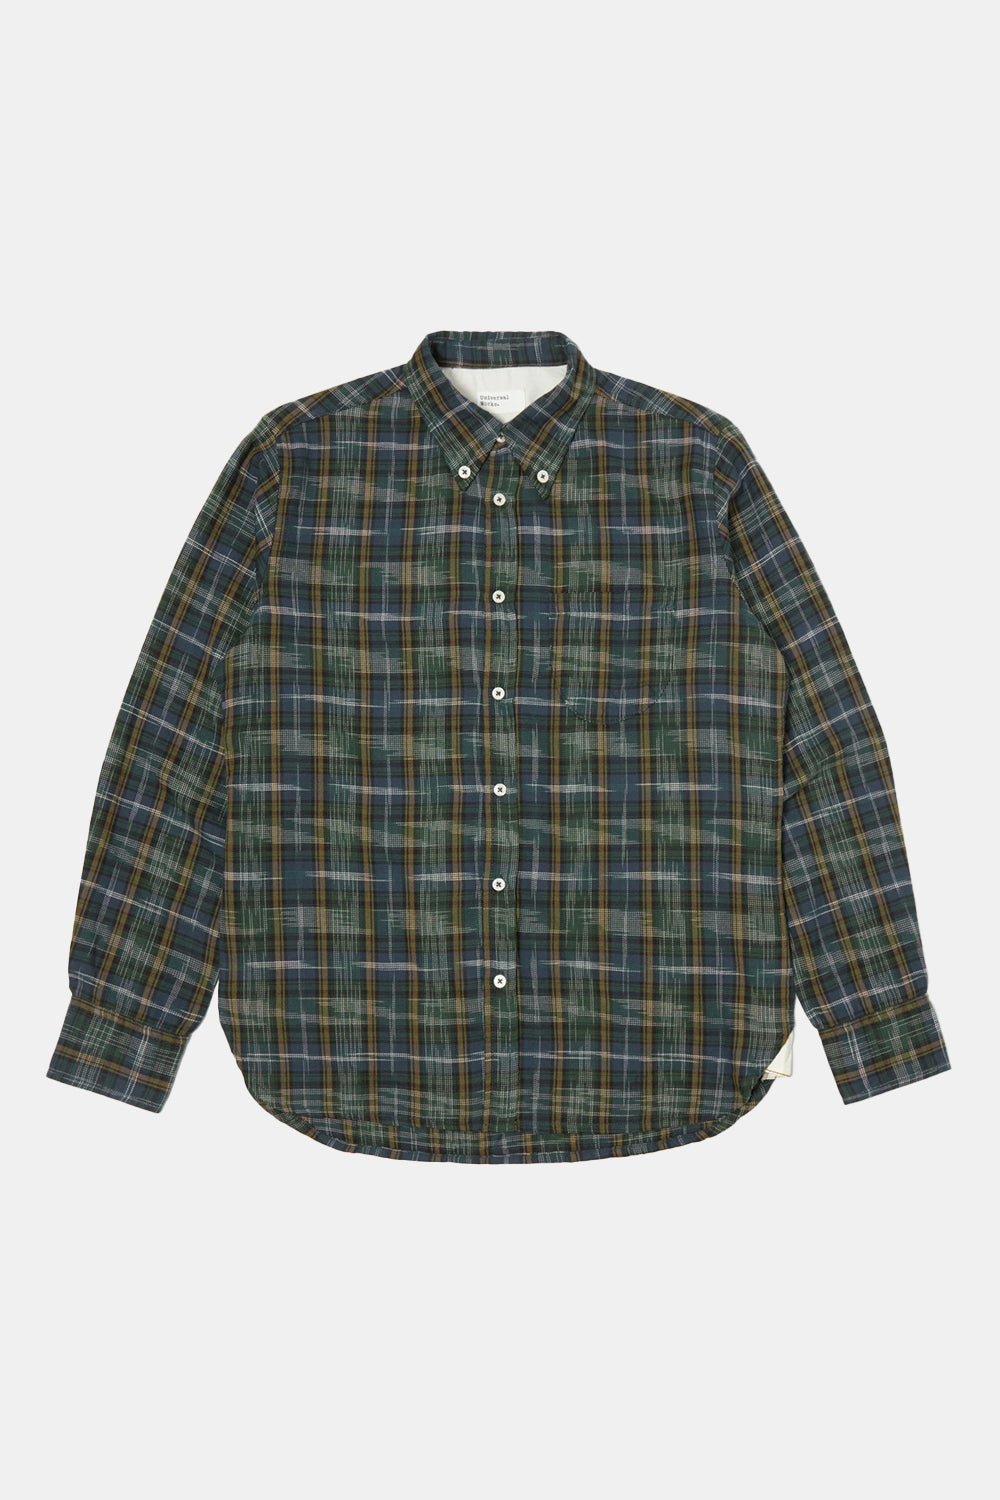 Universal Works Daybrook Shirt (Green Ikat Twill Check)
